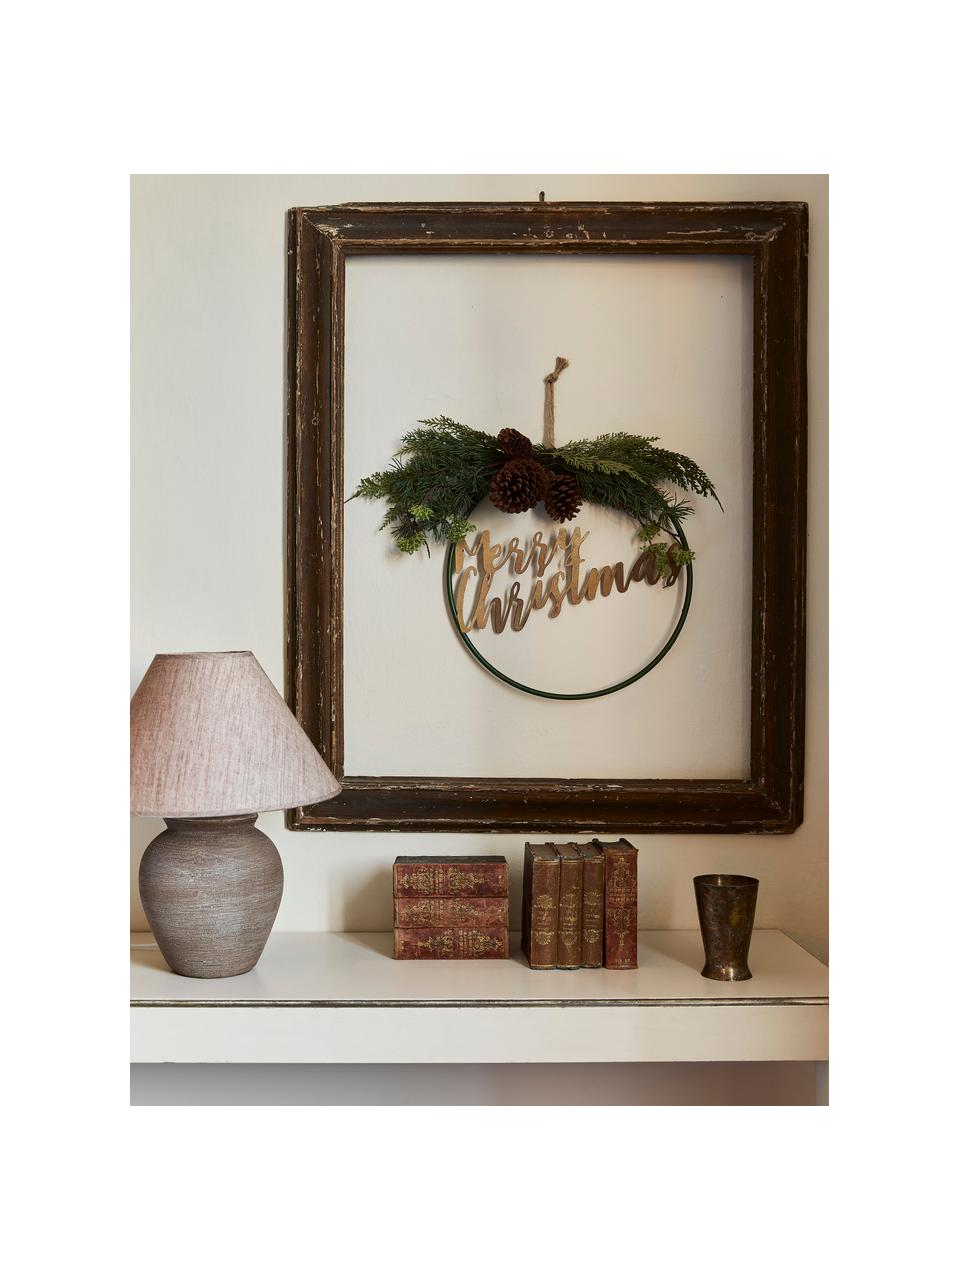 Ghirlanda decorativa Merry Christmas, Metallo, plastica, tenone, Verde, marrone, nero, dorato, Ø 36 cm